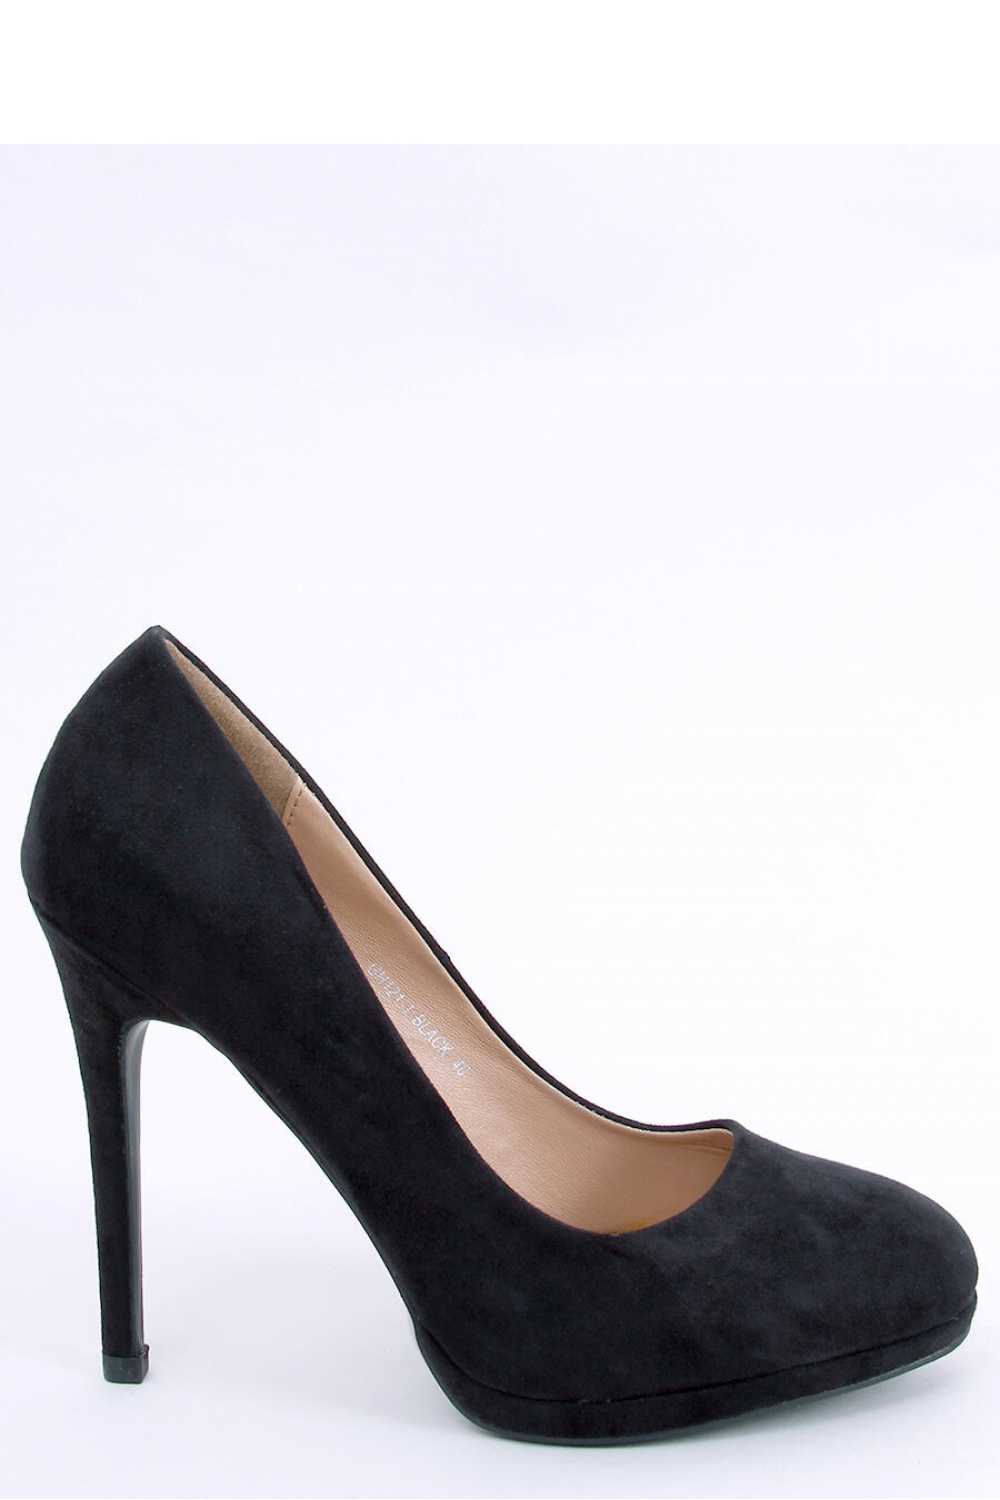  High heels model 174098 Inello  black